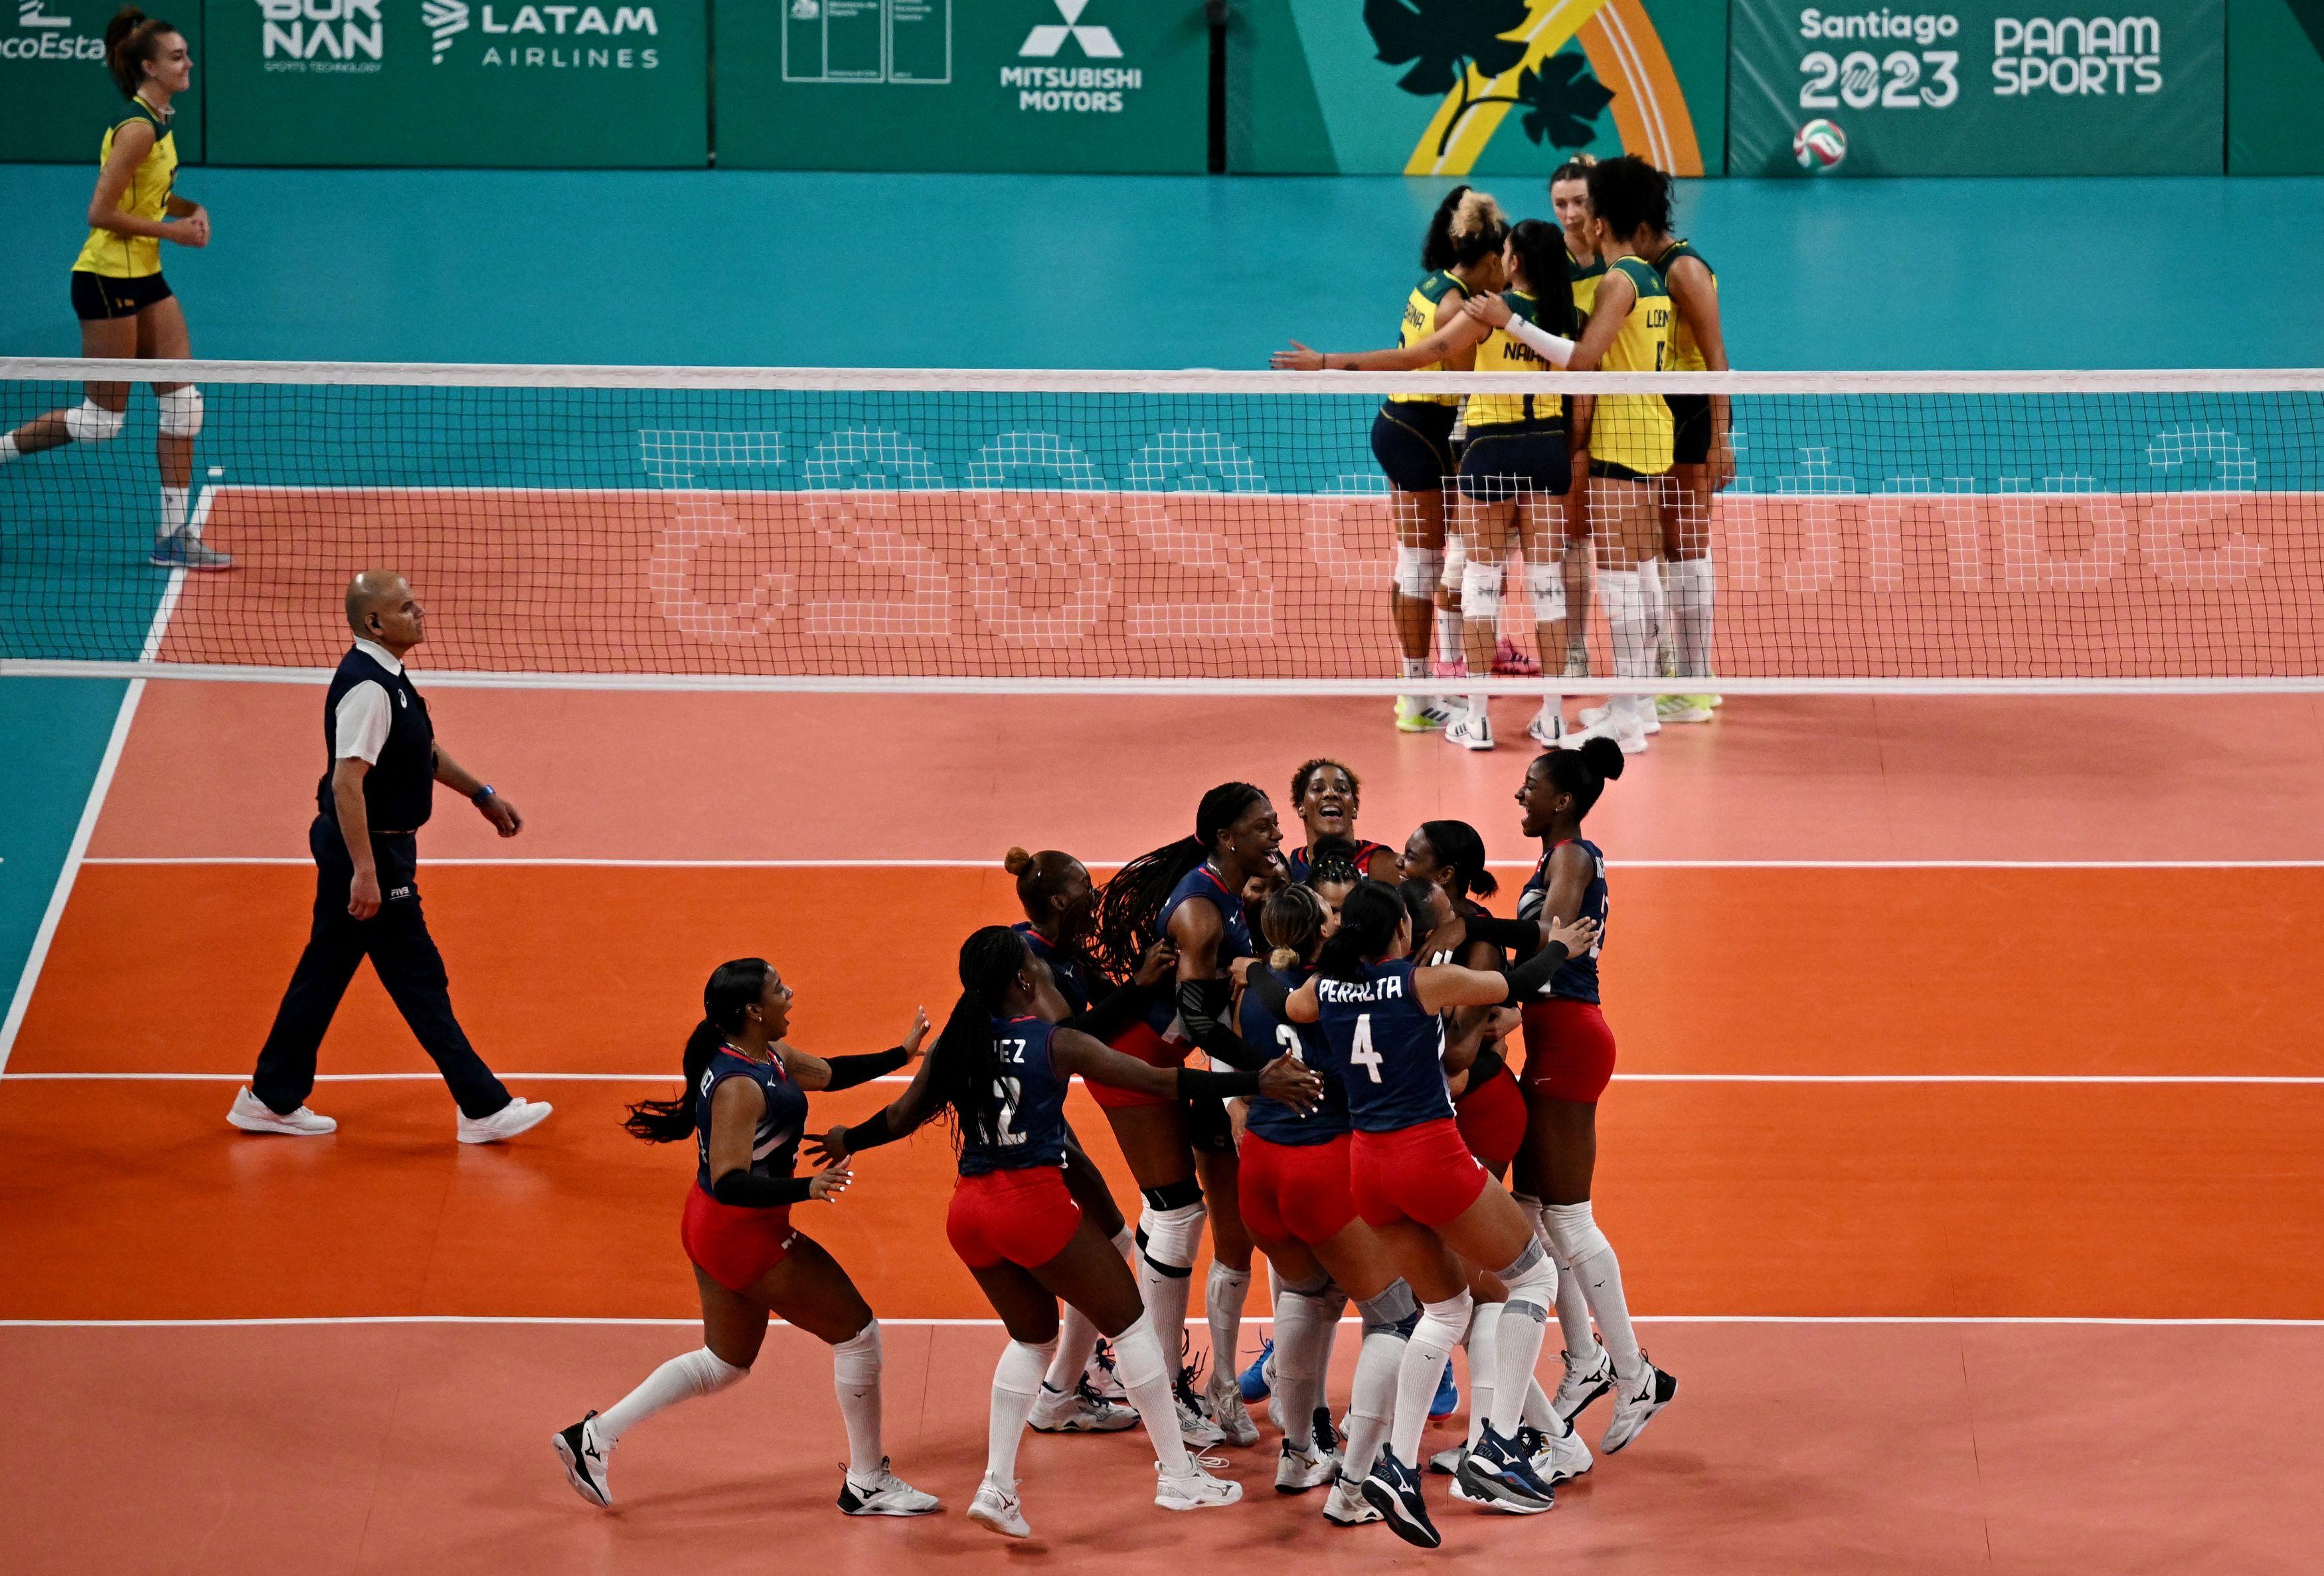 No vôlei feminino, Brasil vence República Dominicana no tie break